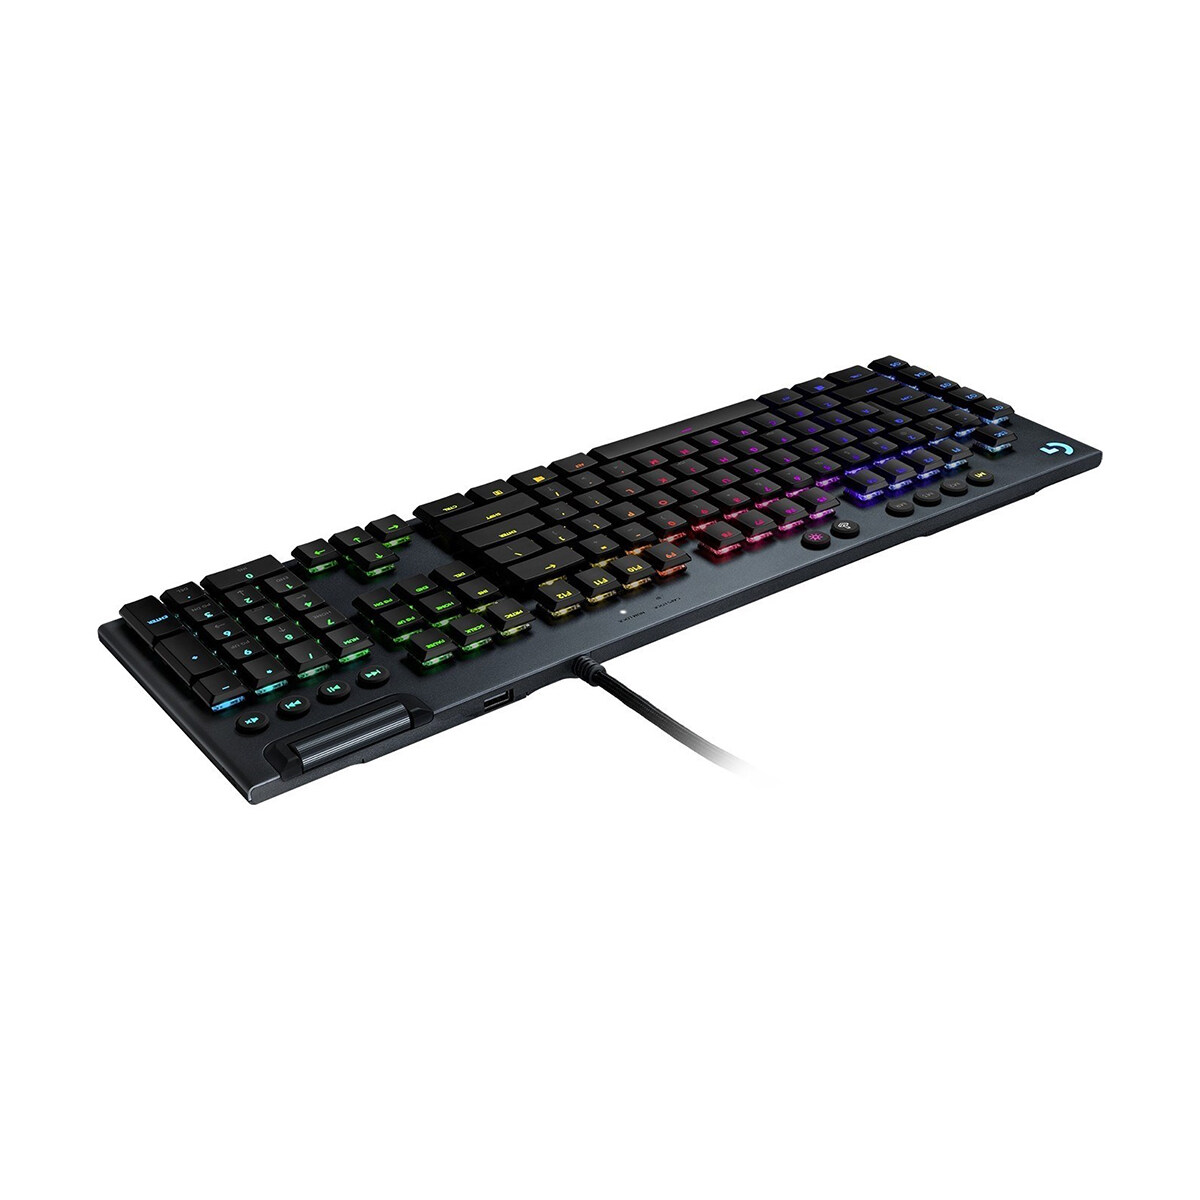 Logitech G813 Lightsync RGB Mechanical Gaming Keyboard (Tactile / Linear / Clicky) Ultra Thin, Logitech G HUB